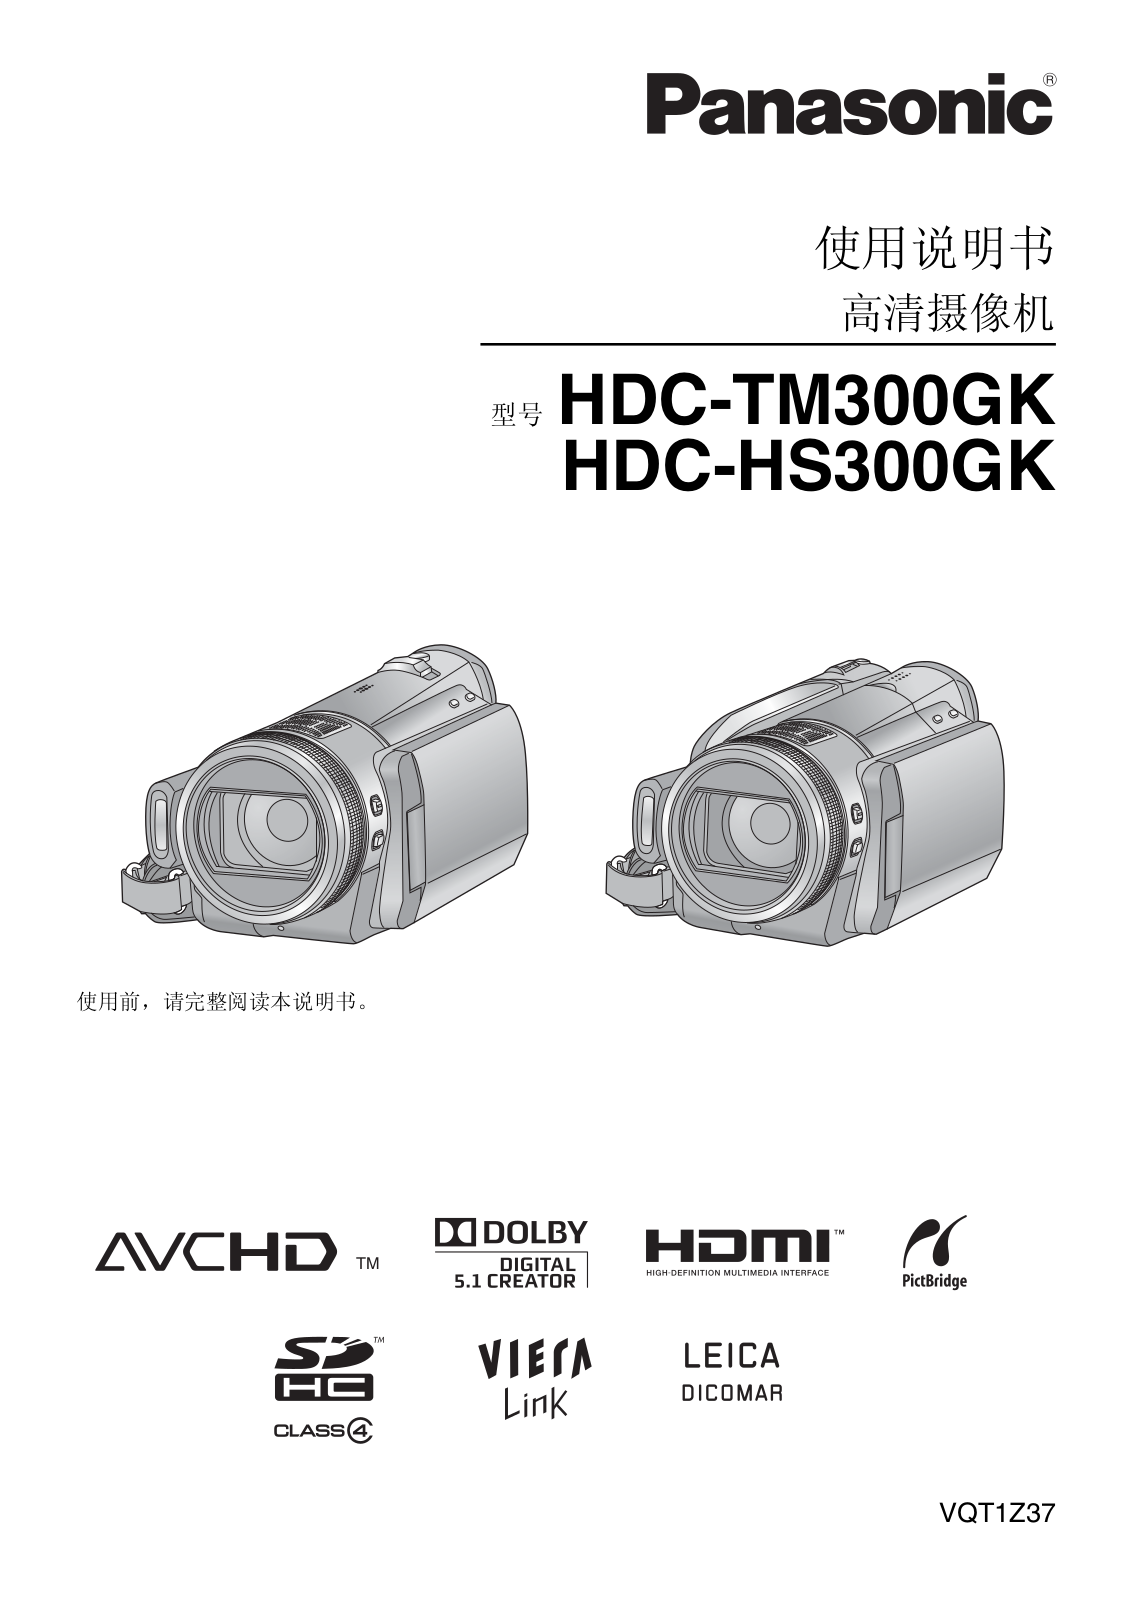 Panasonic HDC-TM300GK, HDC-HS300GK User Manual